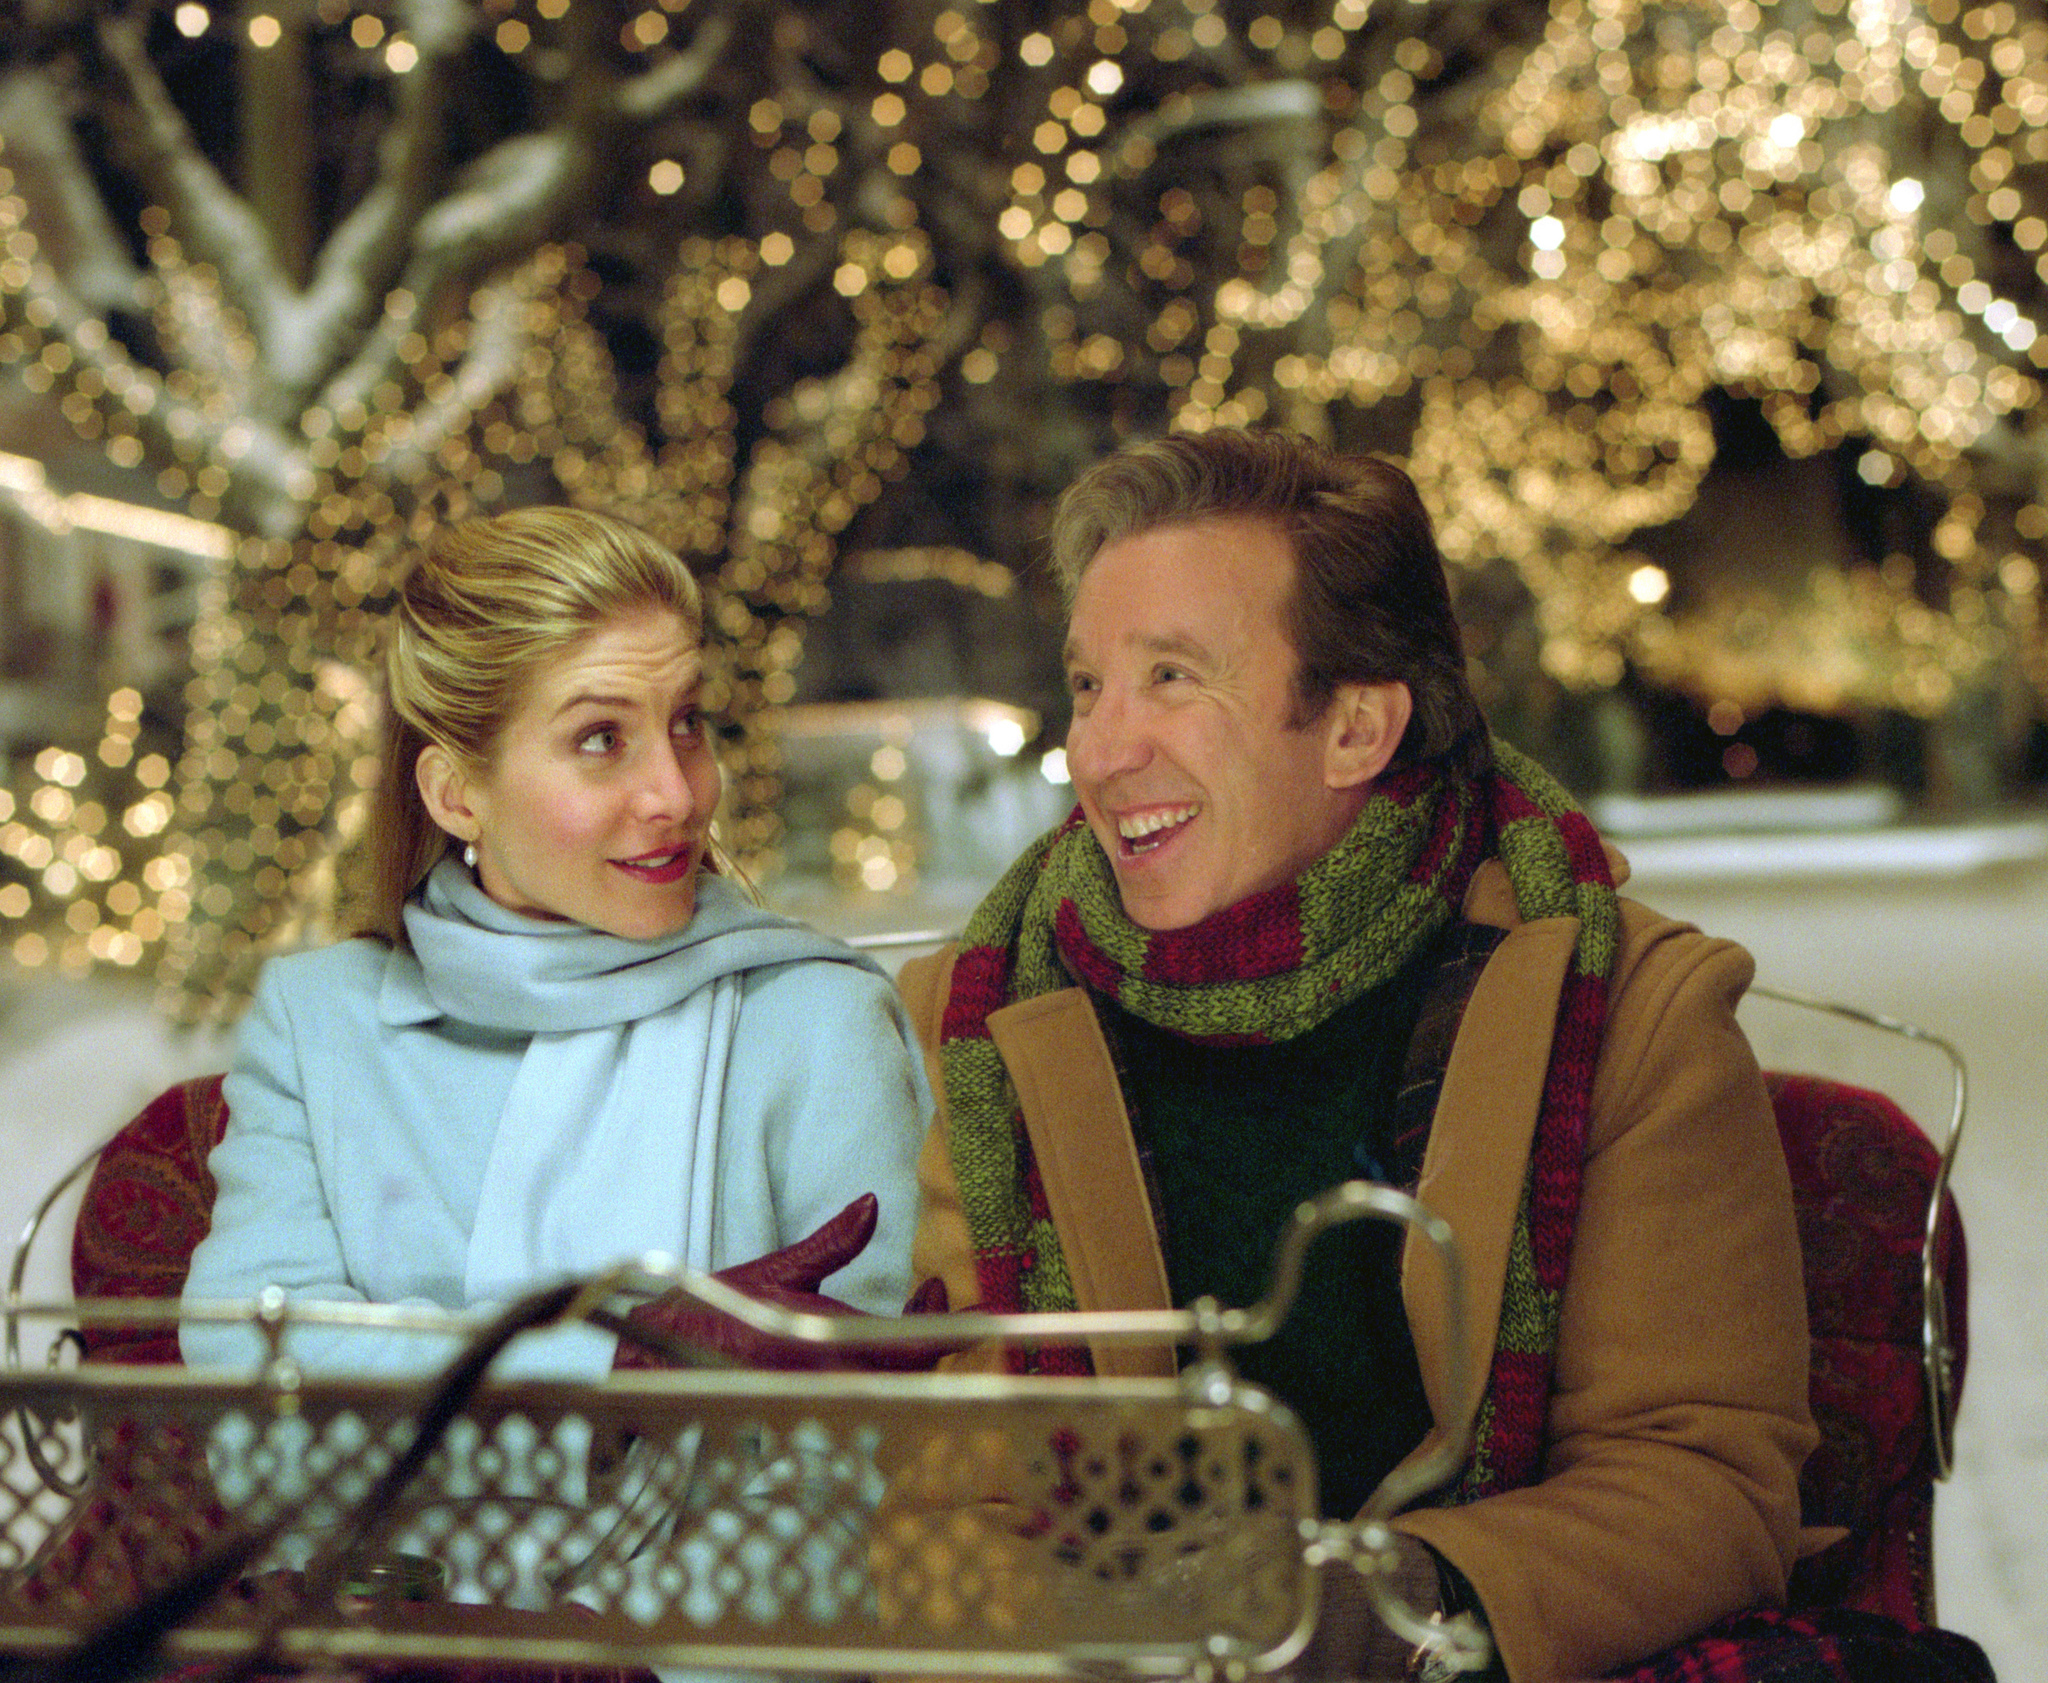 Still of Tim Allen and Elizabeth Mitchell in The Santa Clause 2 (2002)